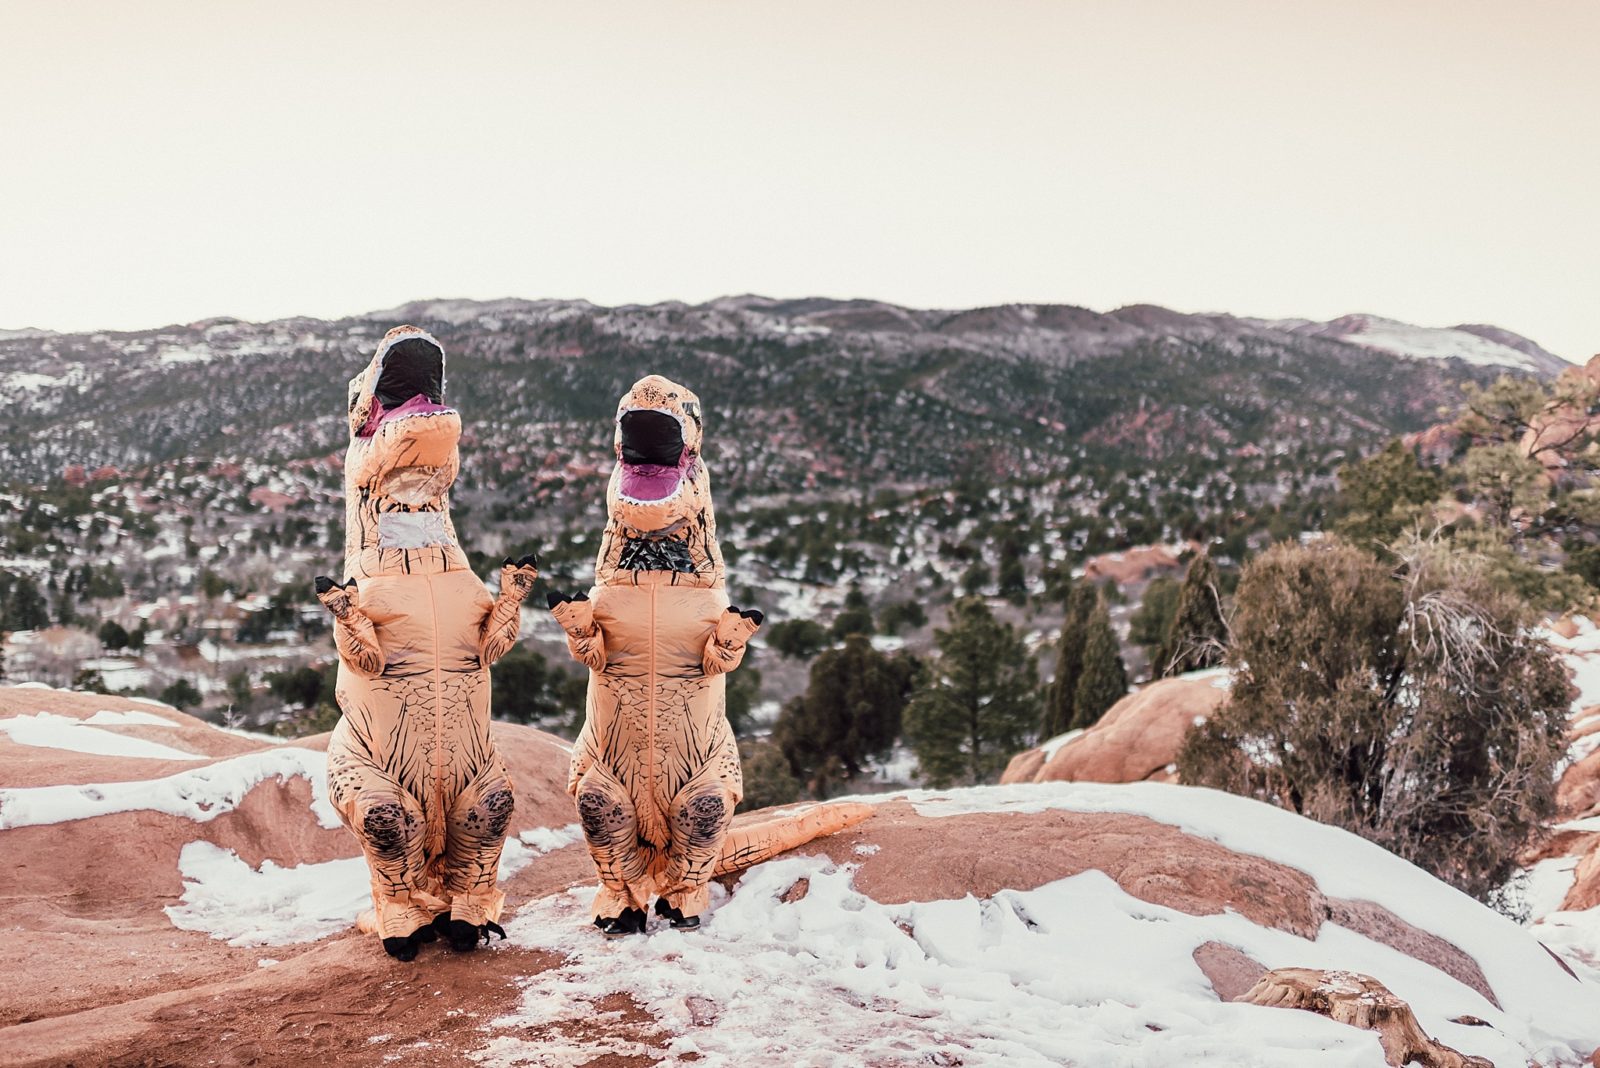 engagement photos in dinosaur costumes